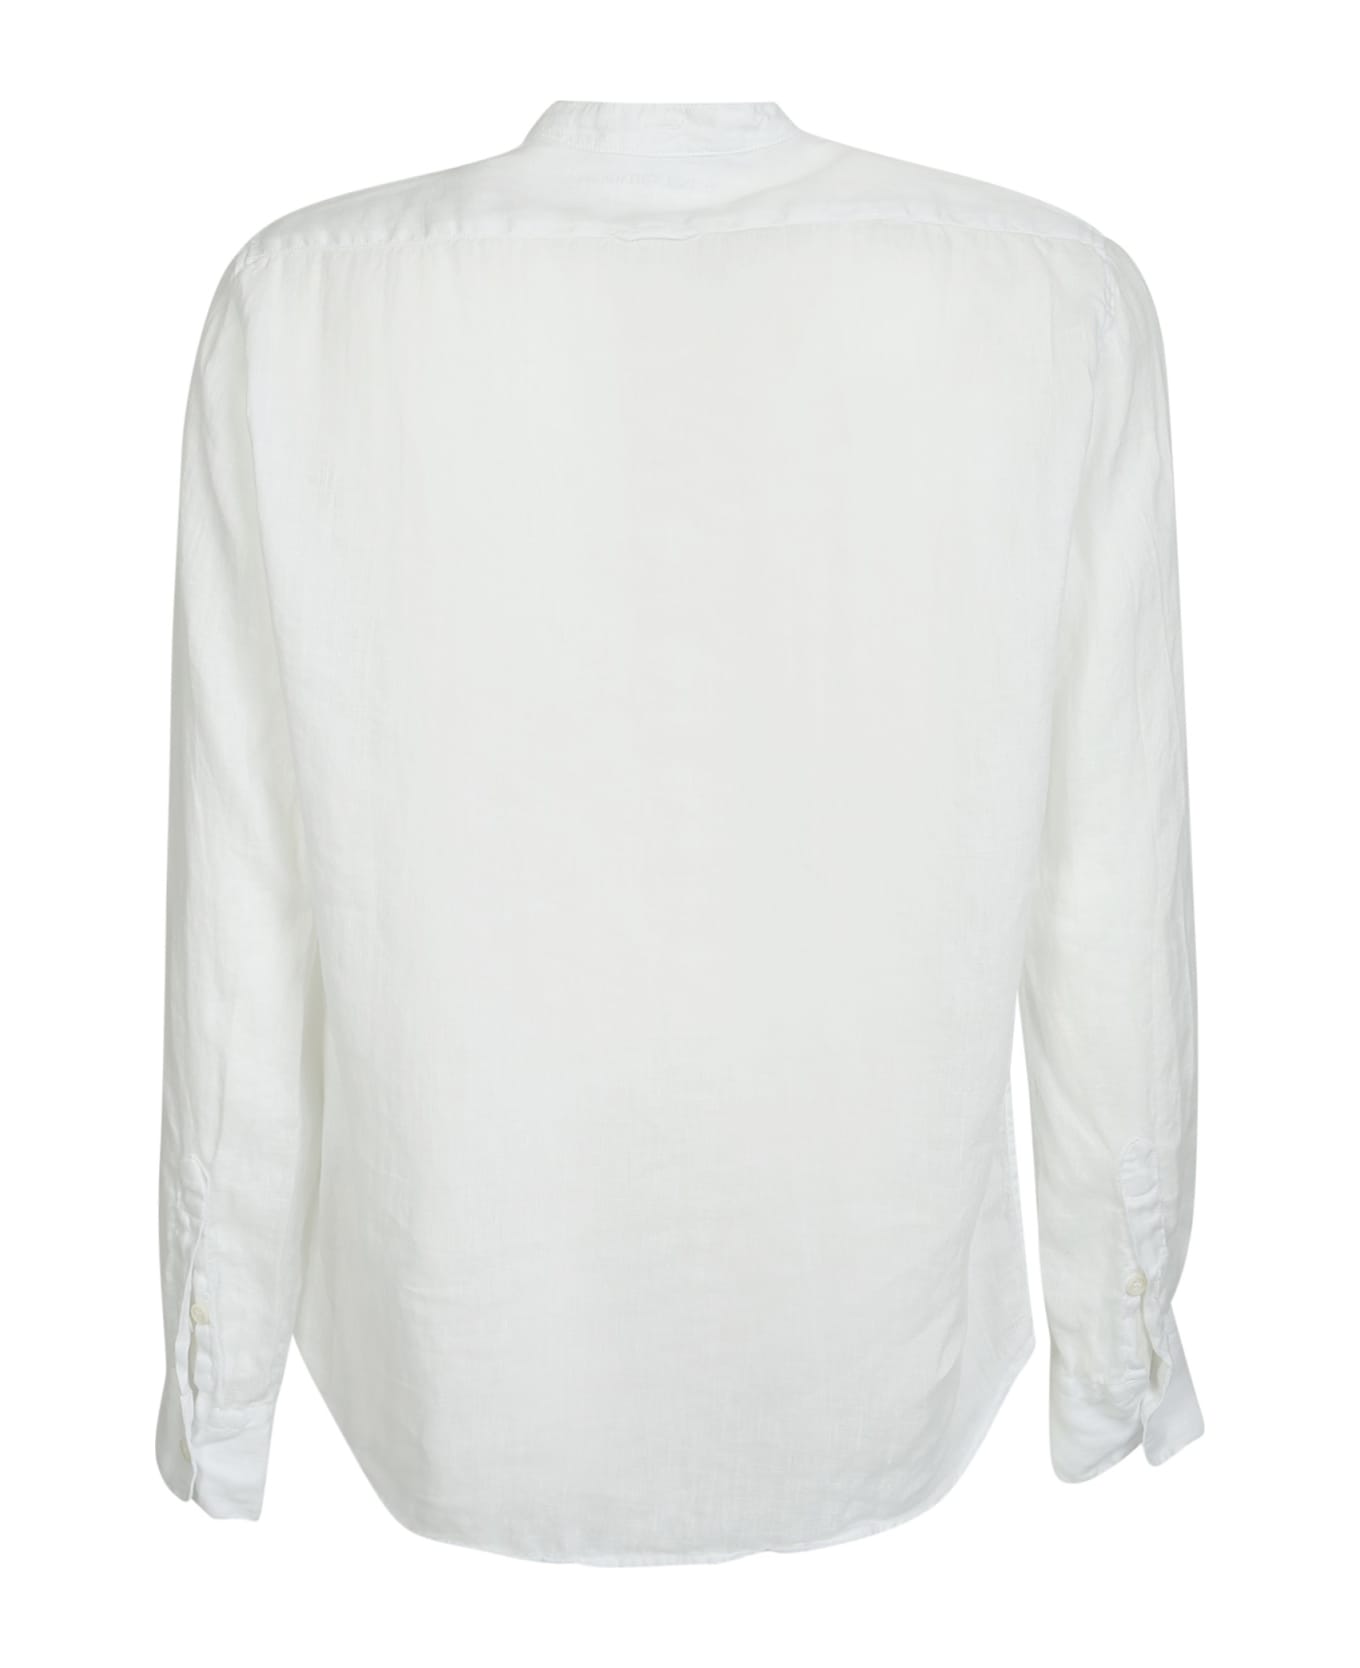 Original Vintage Style Linen Shirt - White